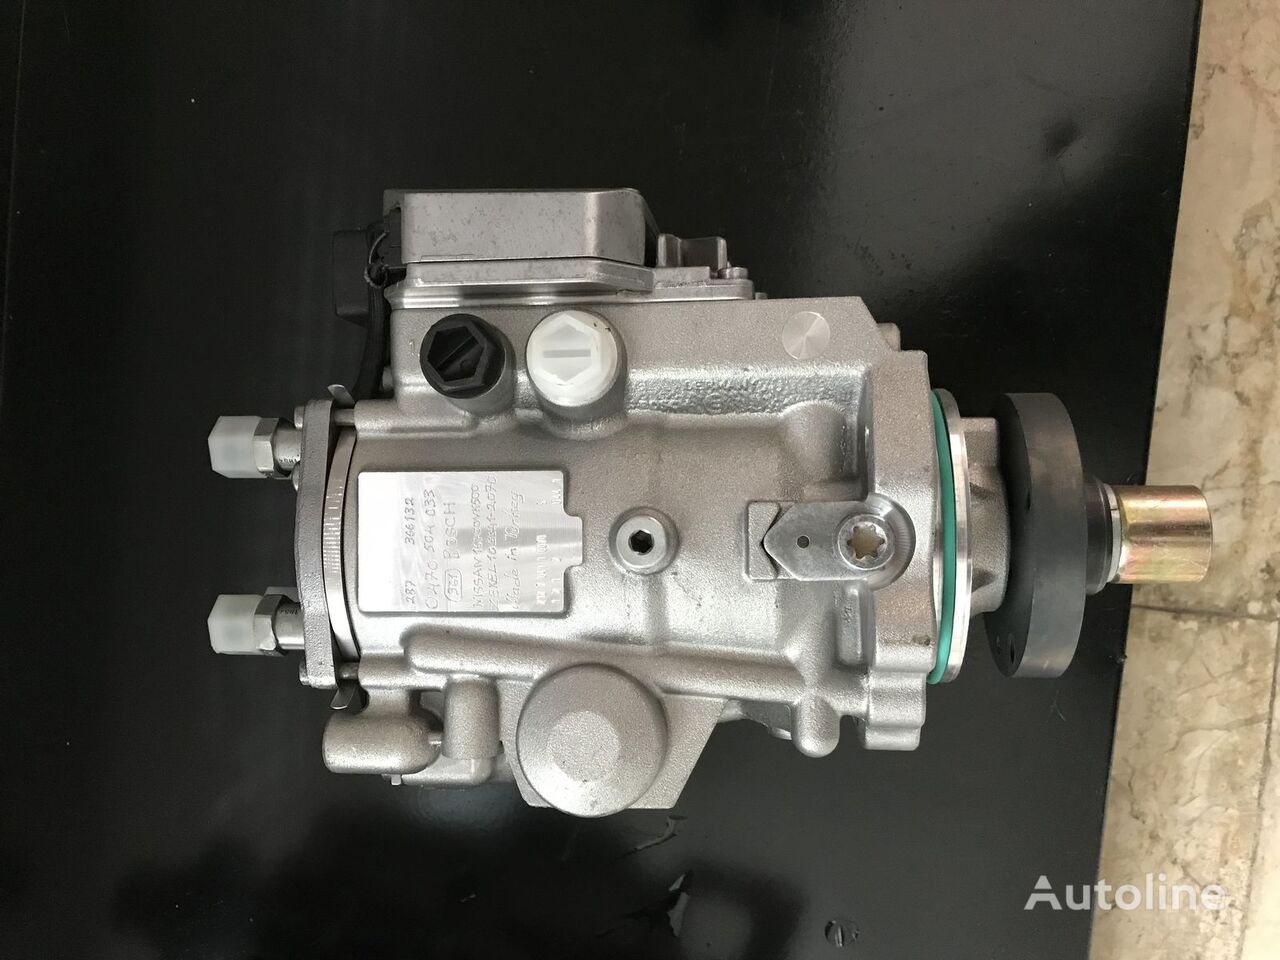 Bosch 16700VK500 fuel pump for Nissan SKYSTER  automobile